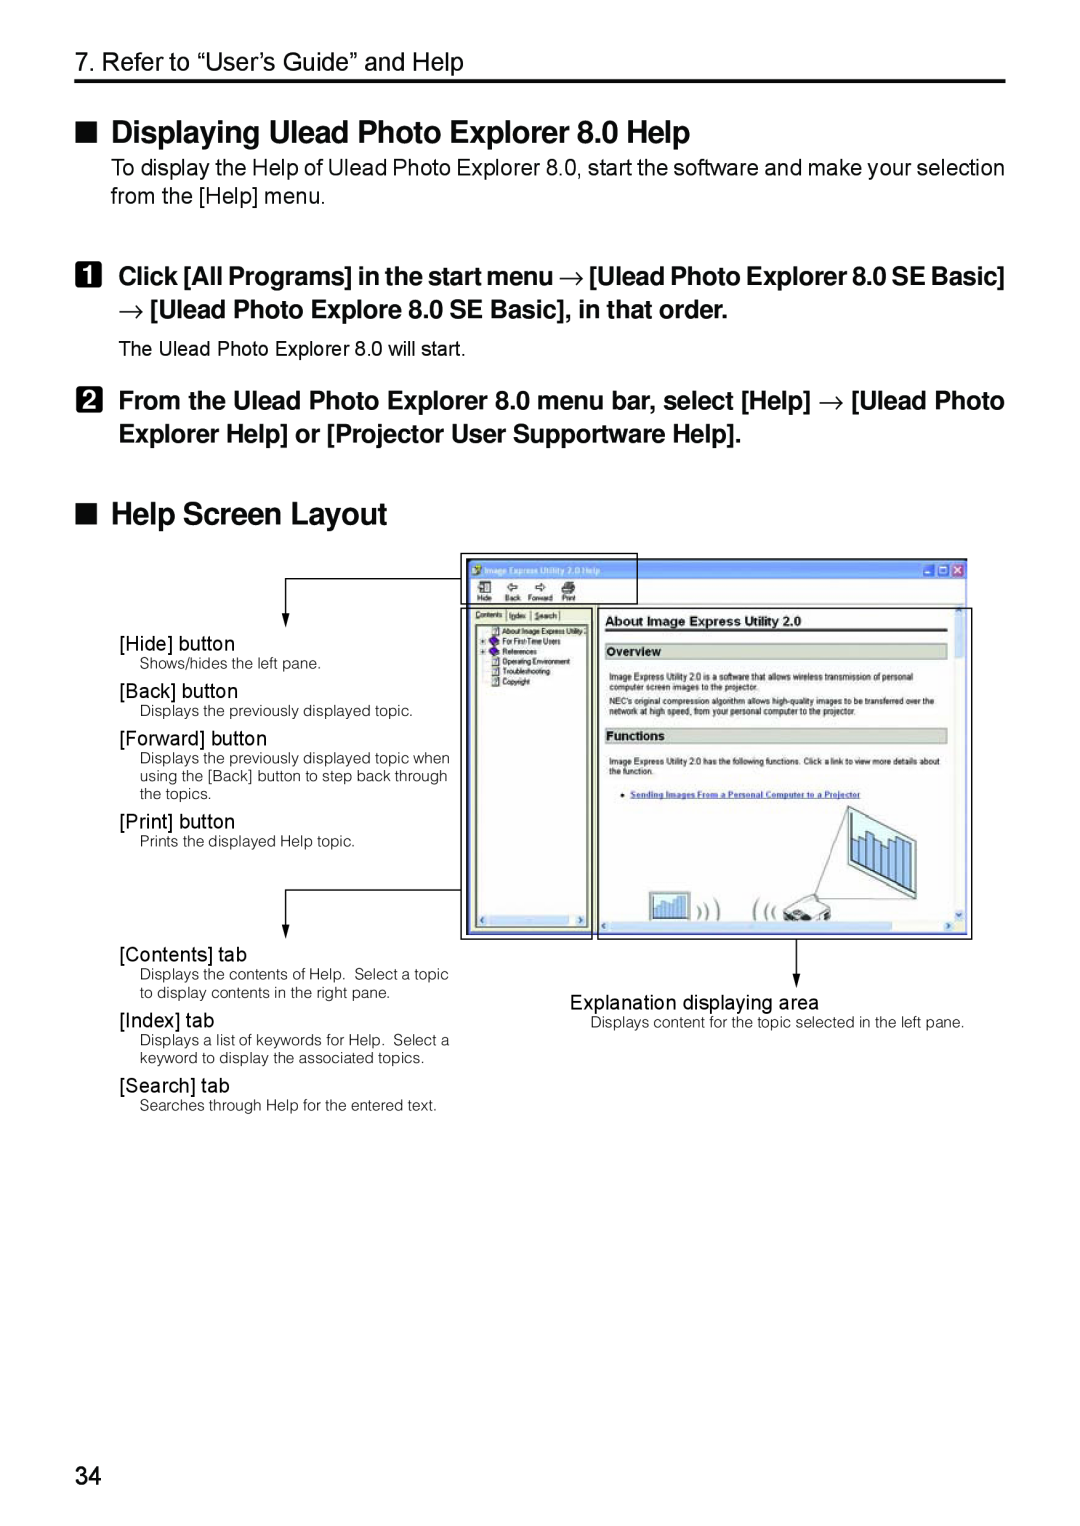 Dukane 8808 Displaying Ulead Photo Explorer 8.0 Help, Help Screen Layout, Explorer Help or Projector User Supportware Help 